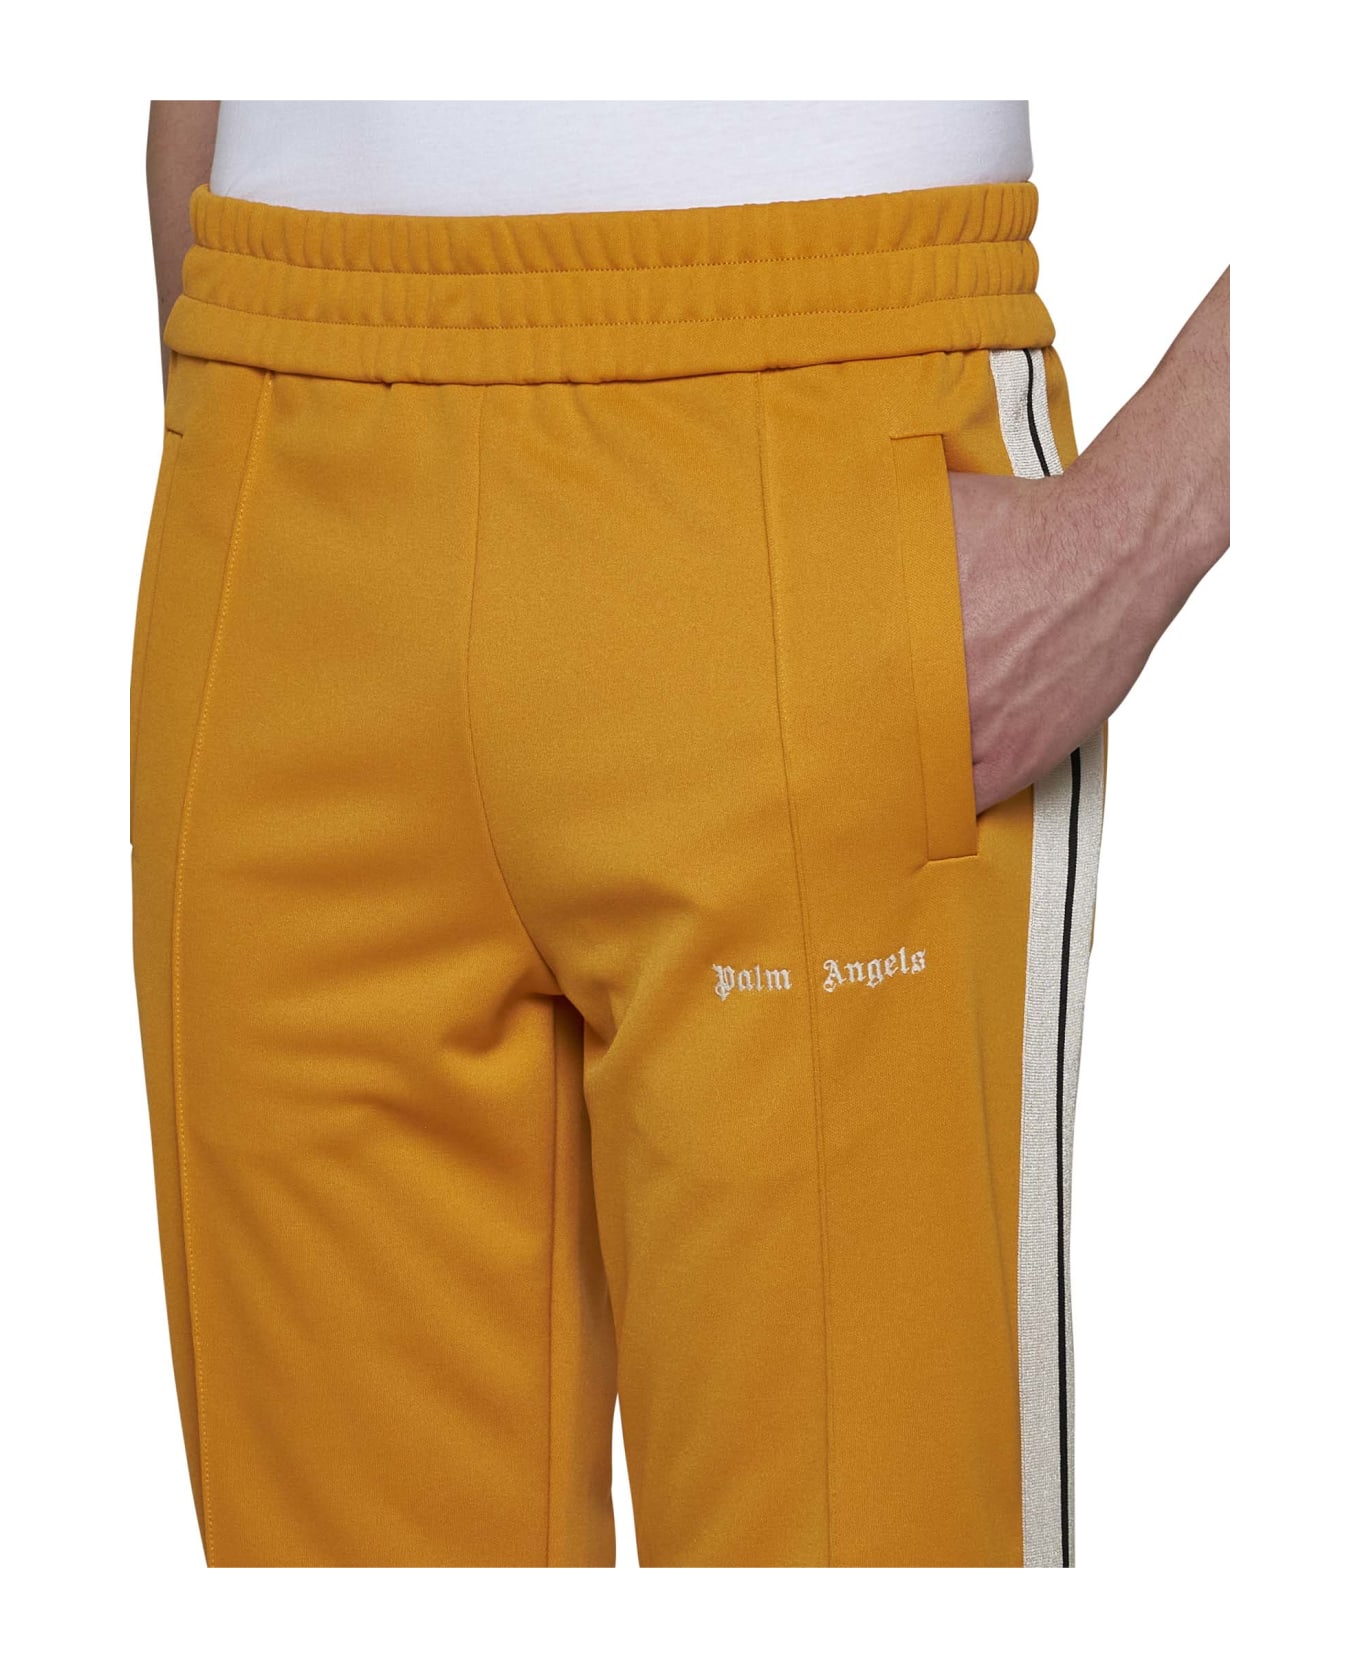 Palm Angels Trouser - Orange